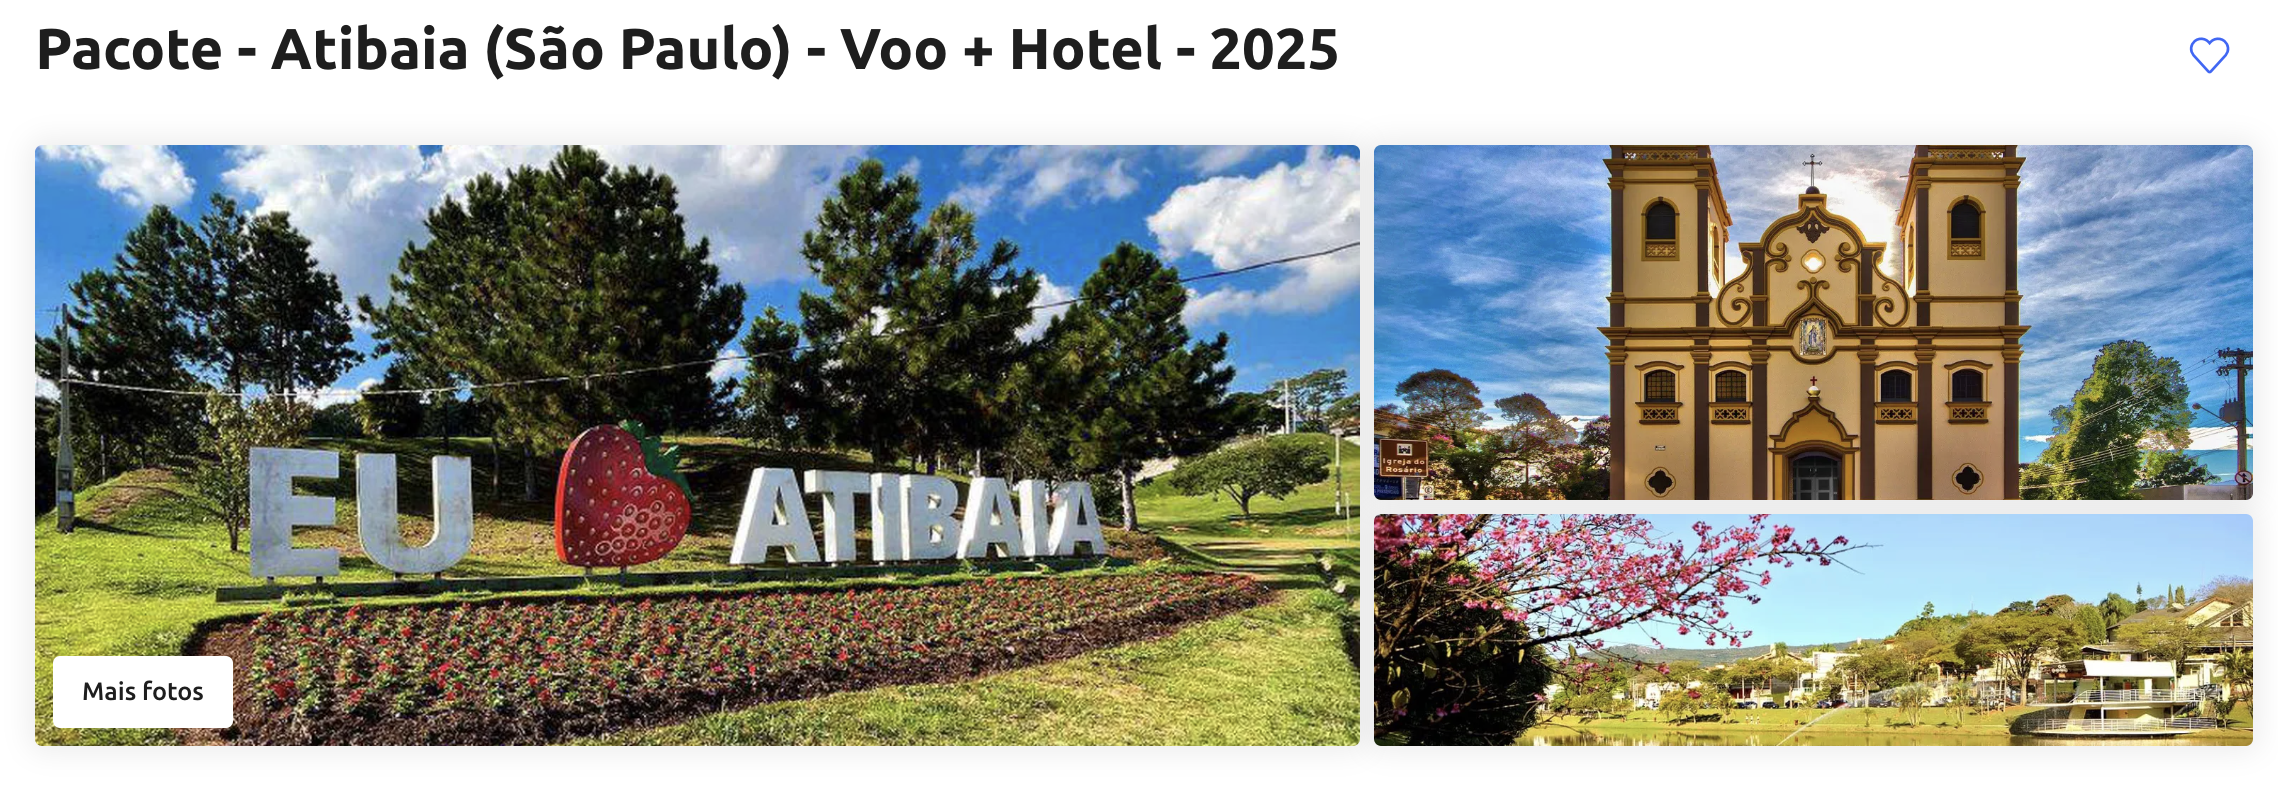 Pacote - Atibaia (São Paulo) - Voo + Hotel - 2025